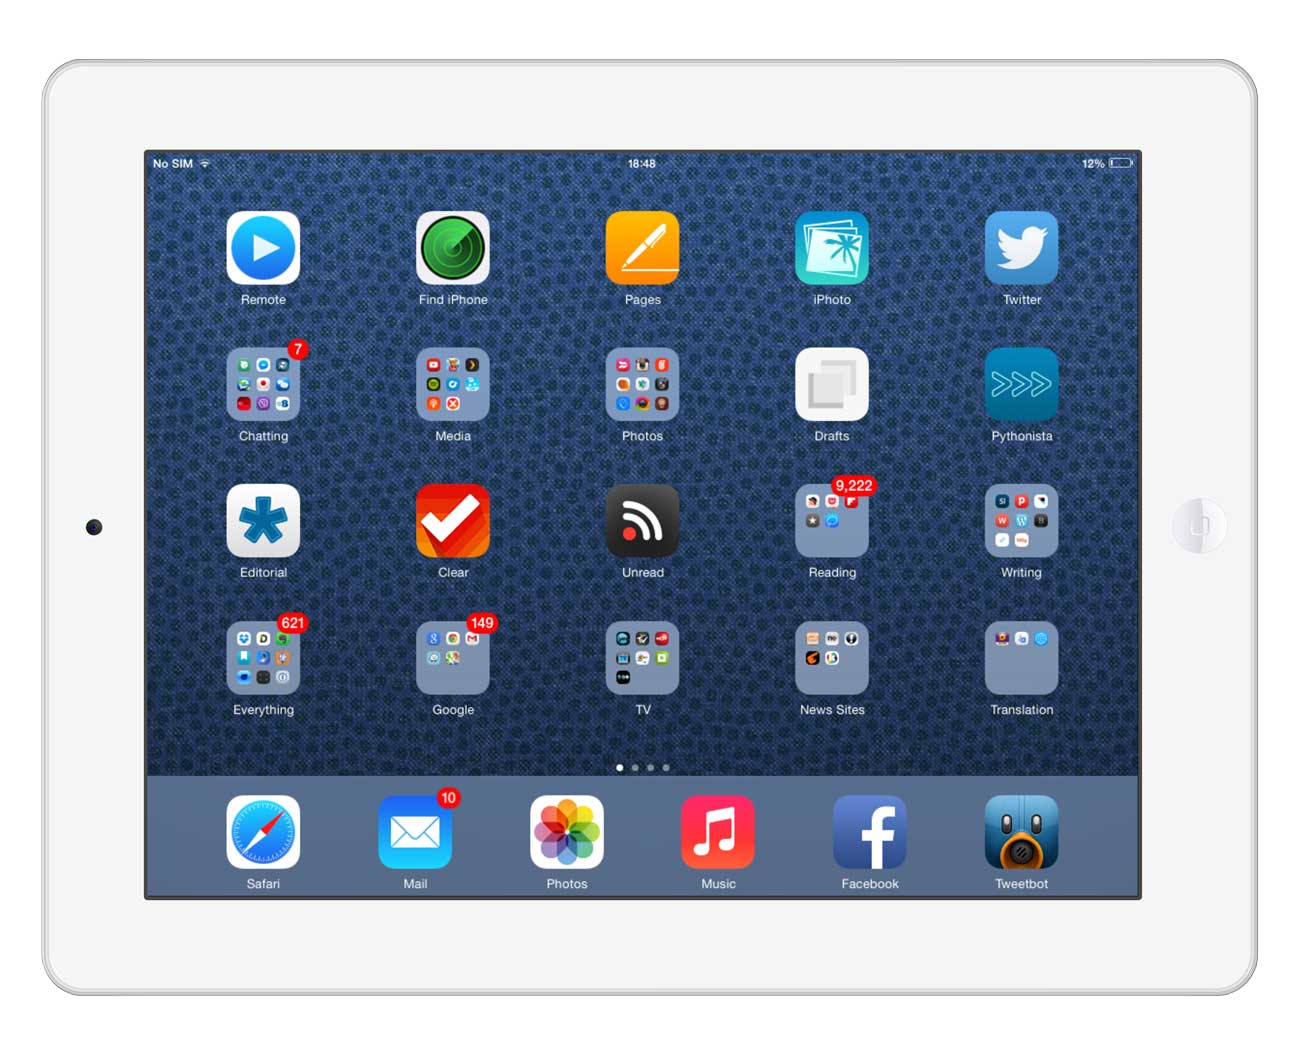 Shahaf Levi's sweet iPad setup